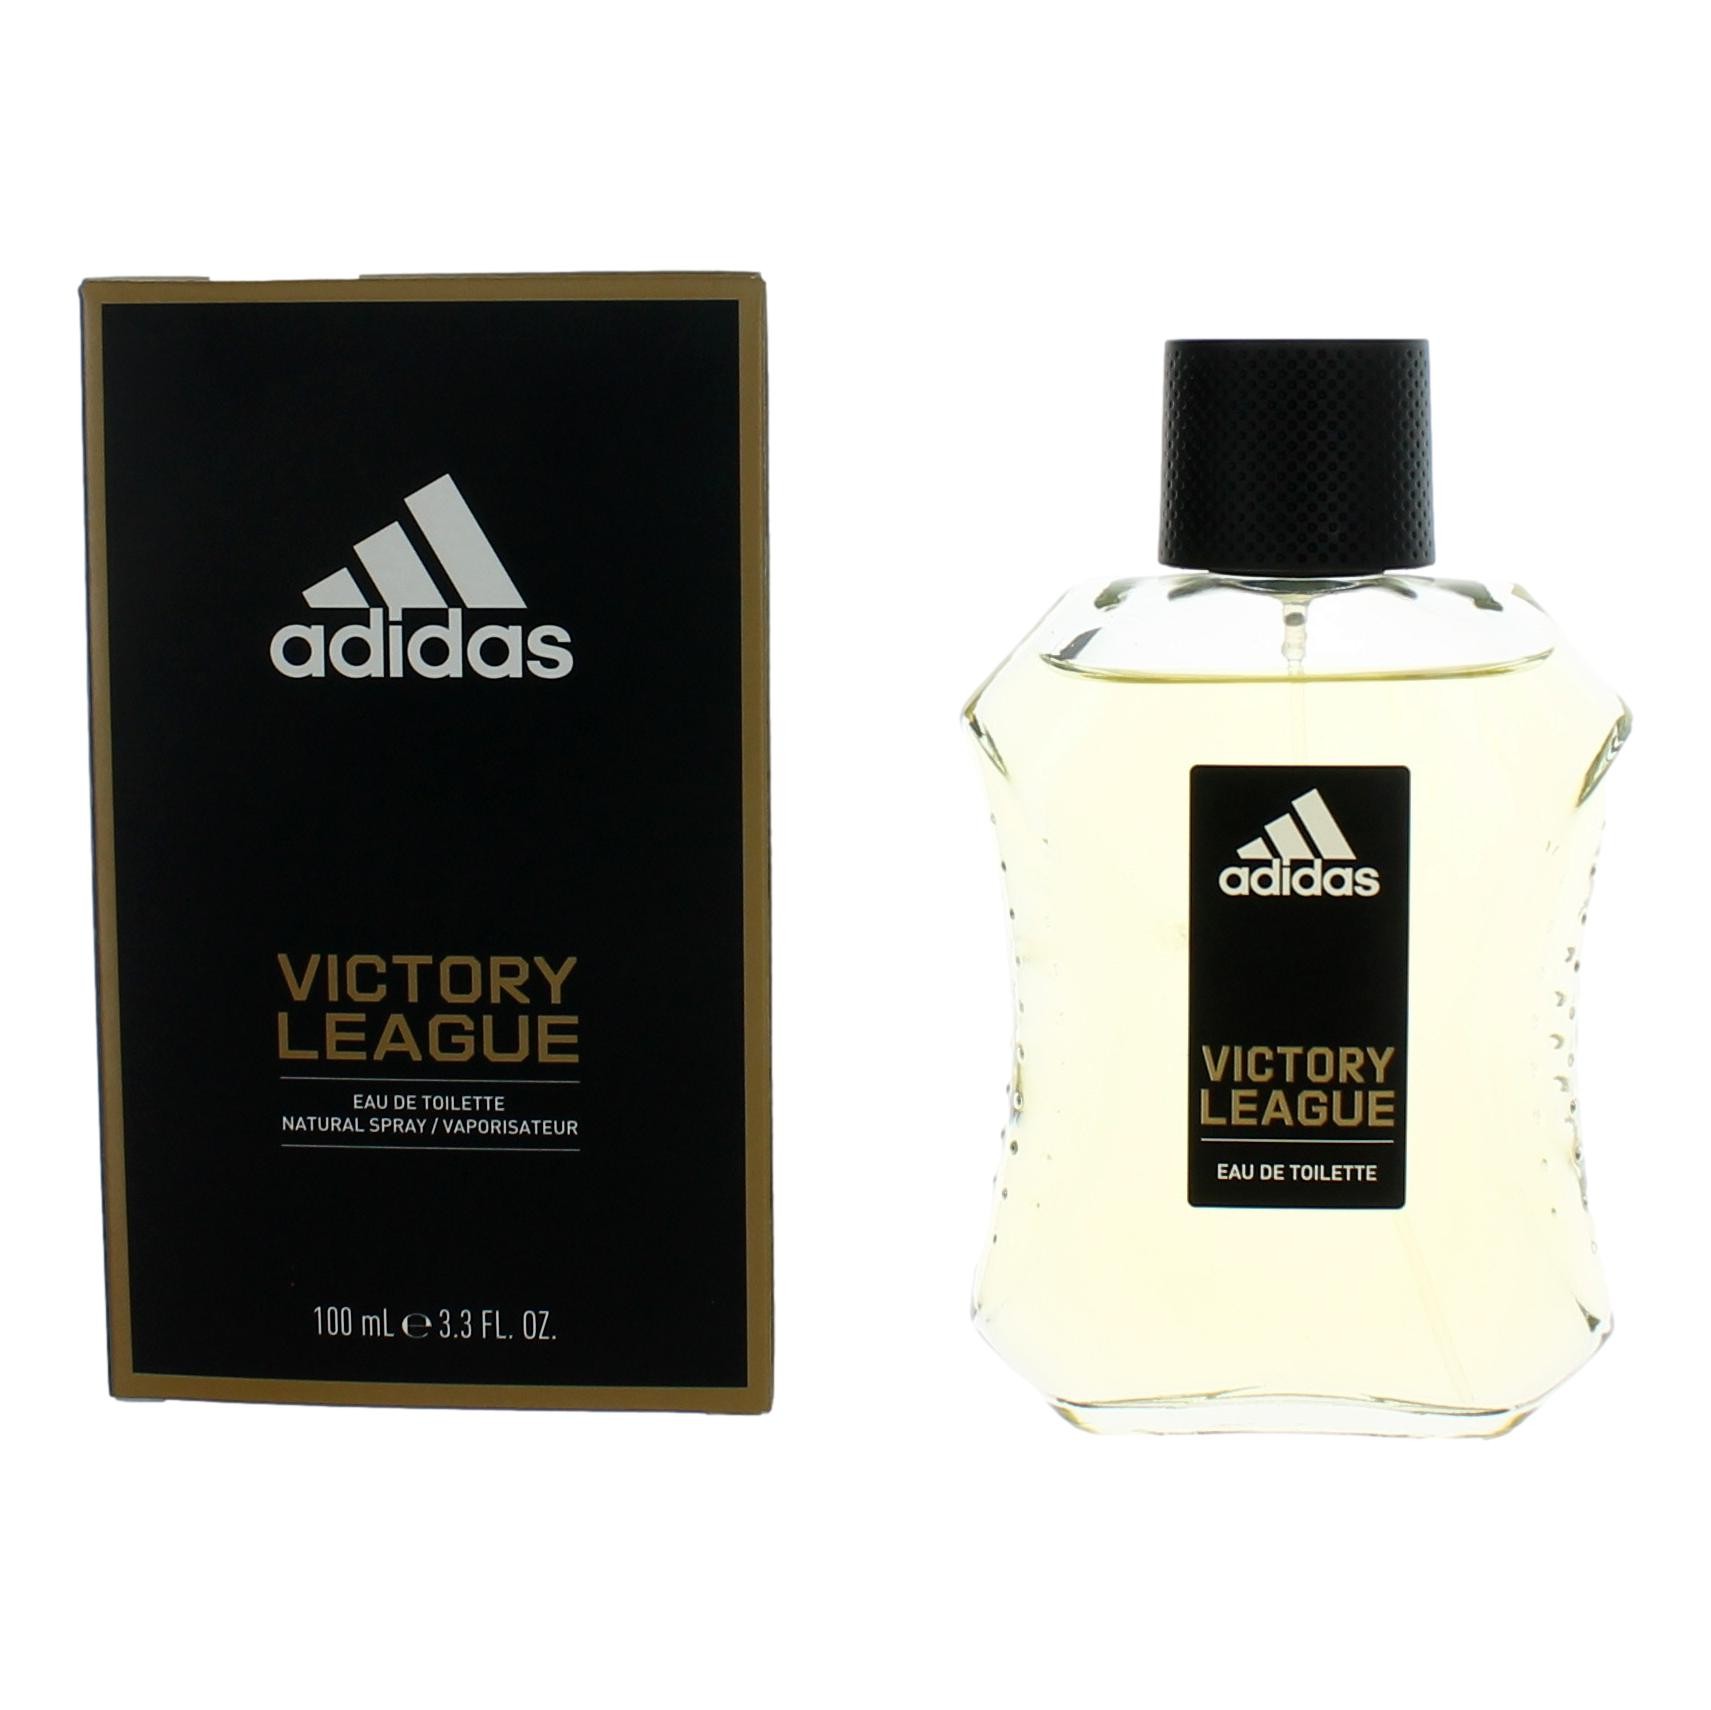 Adidas Victory League by Adidas 3.4 oz Eau de Toilette Spray for Men